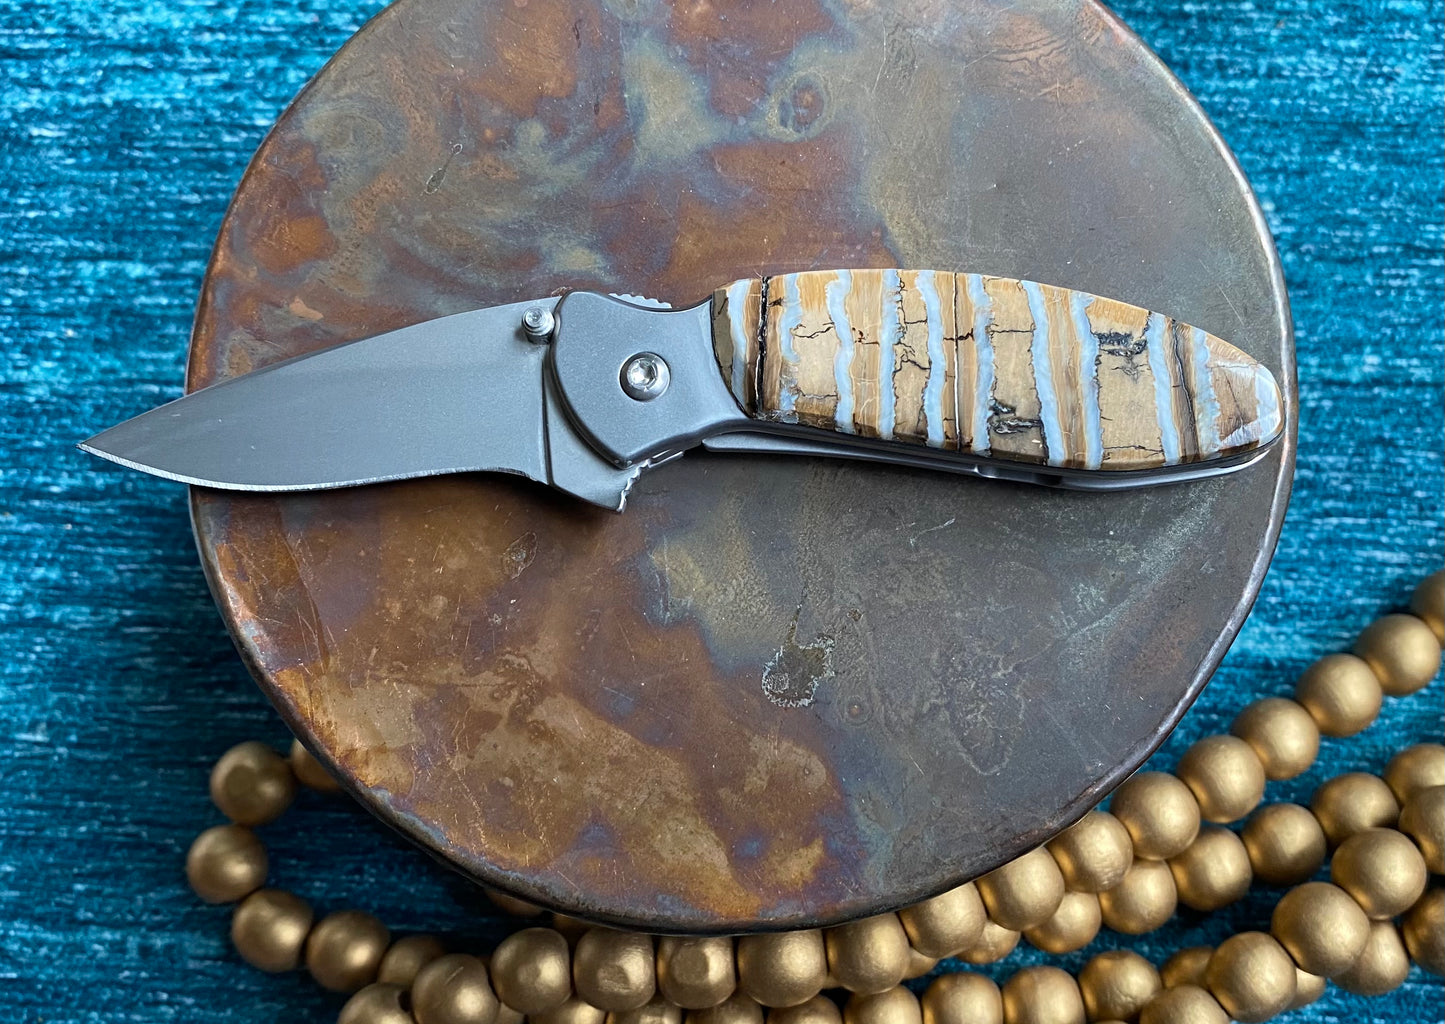 Kershaw Scallion Mammoth Tooth Pocket Knife